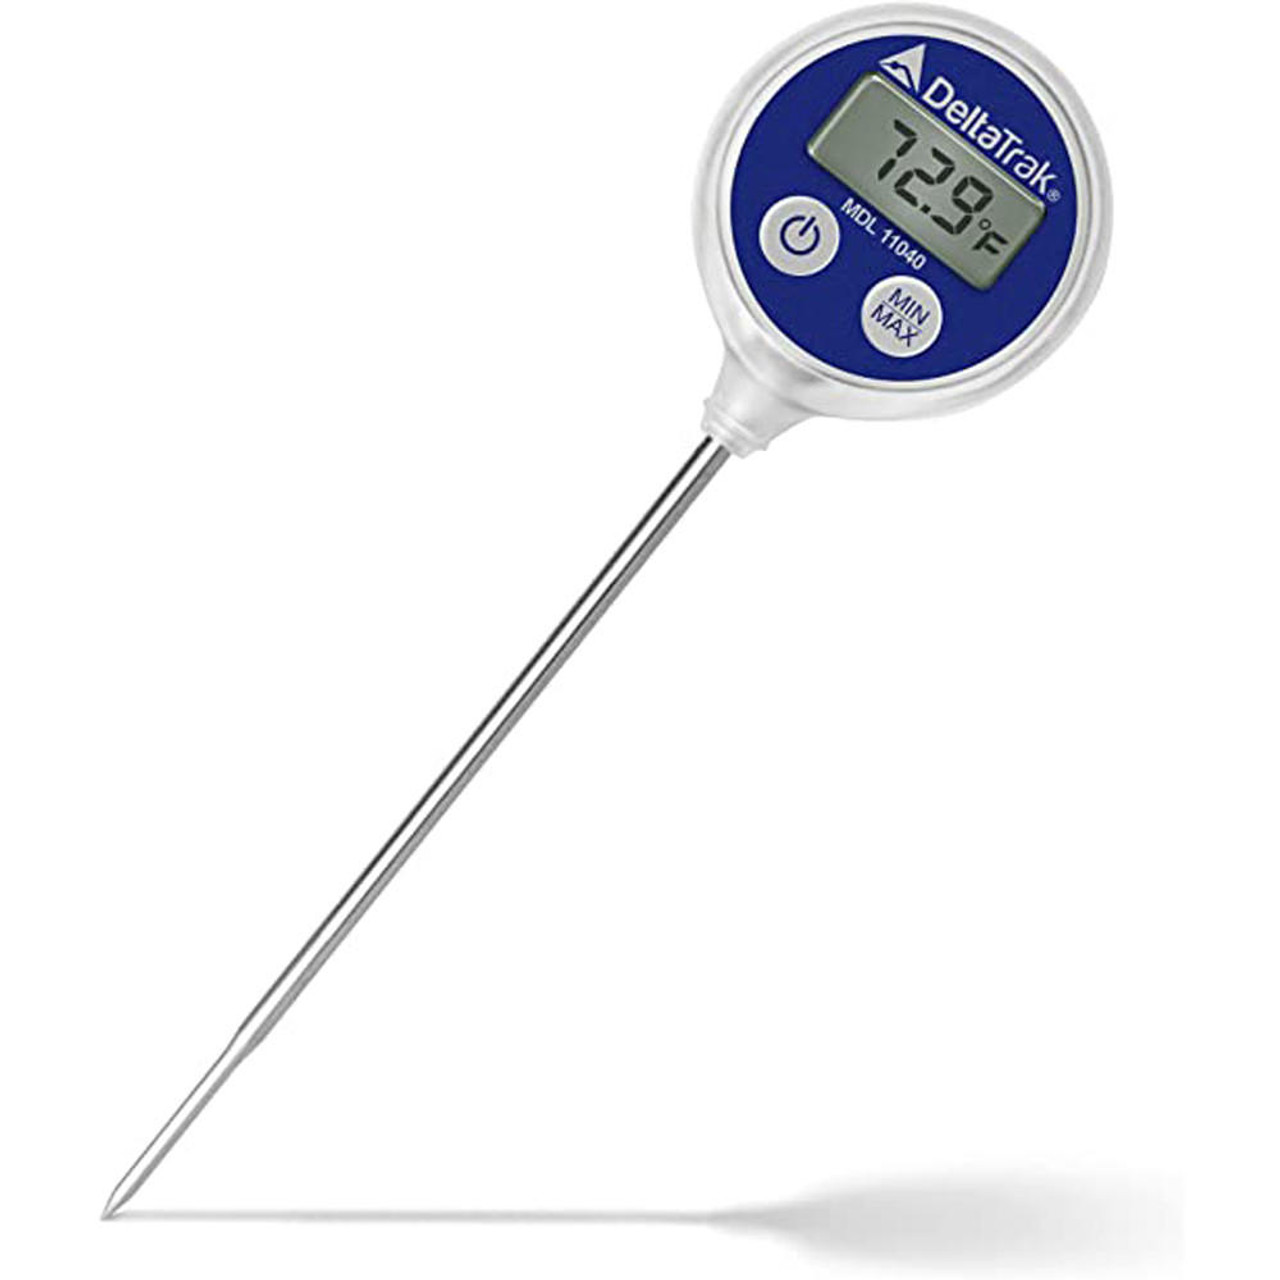 DeltaTrak 11040 FlashCheck Lollipop Min/Max Auto-Cal Thermometer